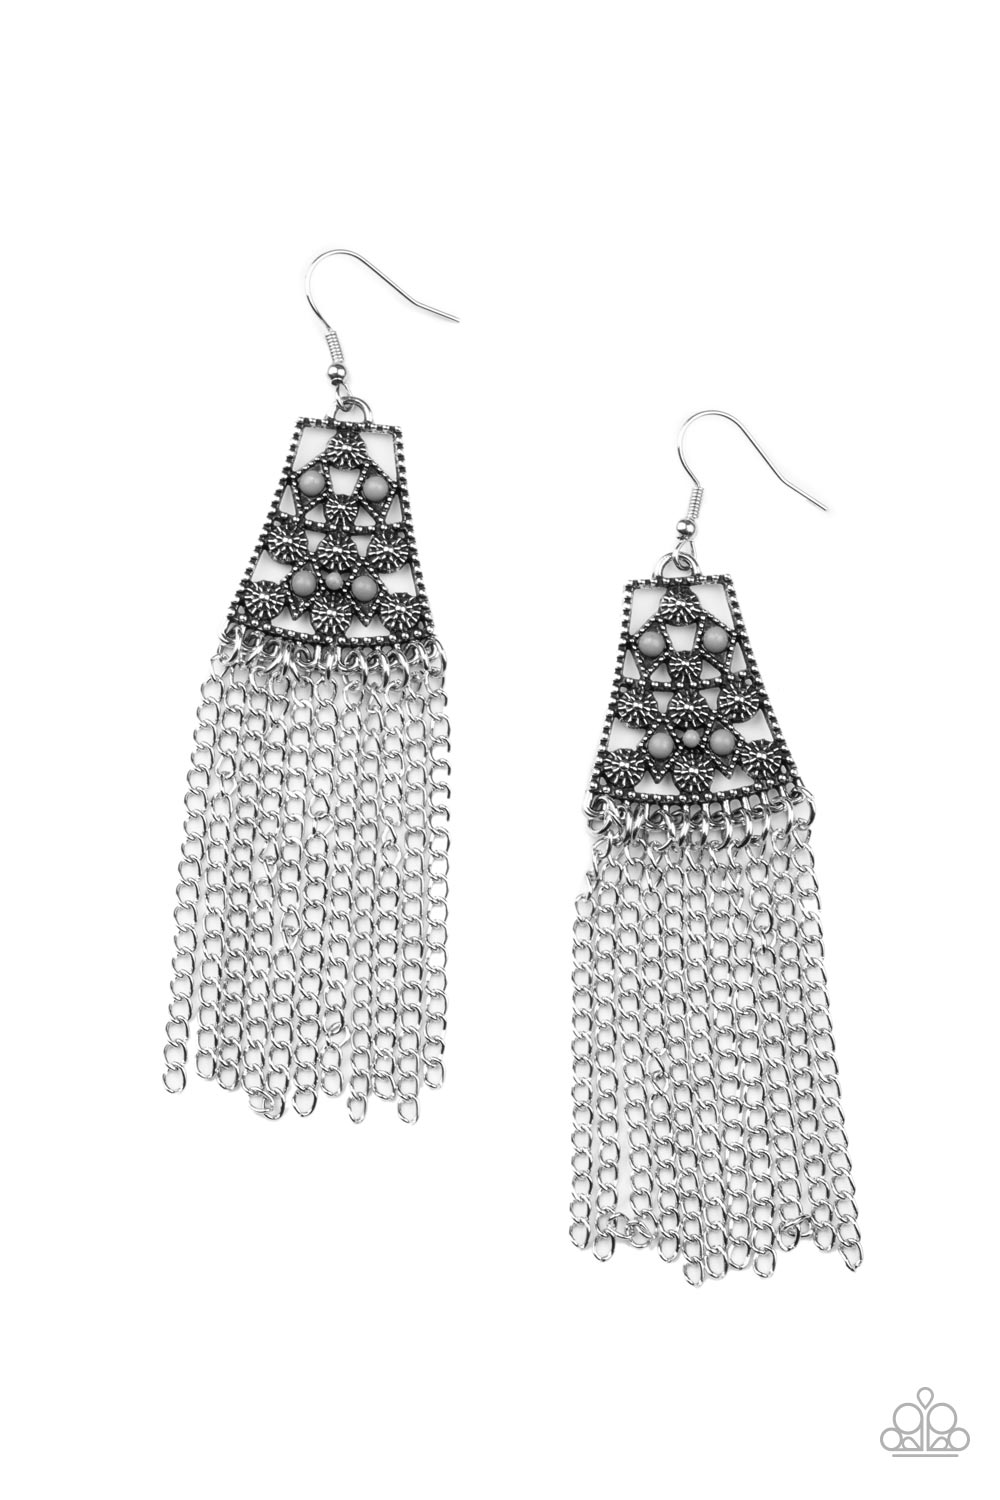 Cleopatra Gemstone Fringe Earring Kit - Silver and Azurite – Goody Beads